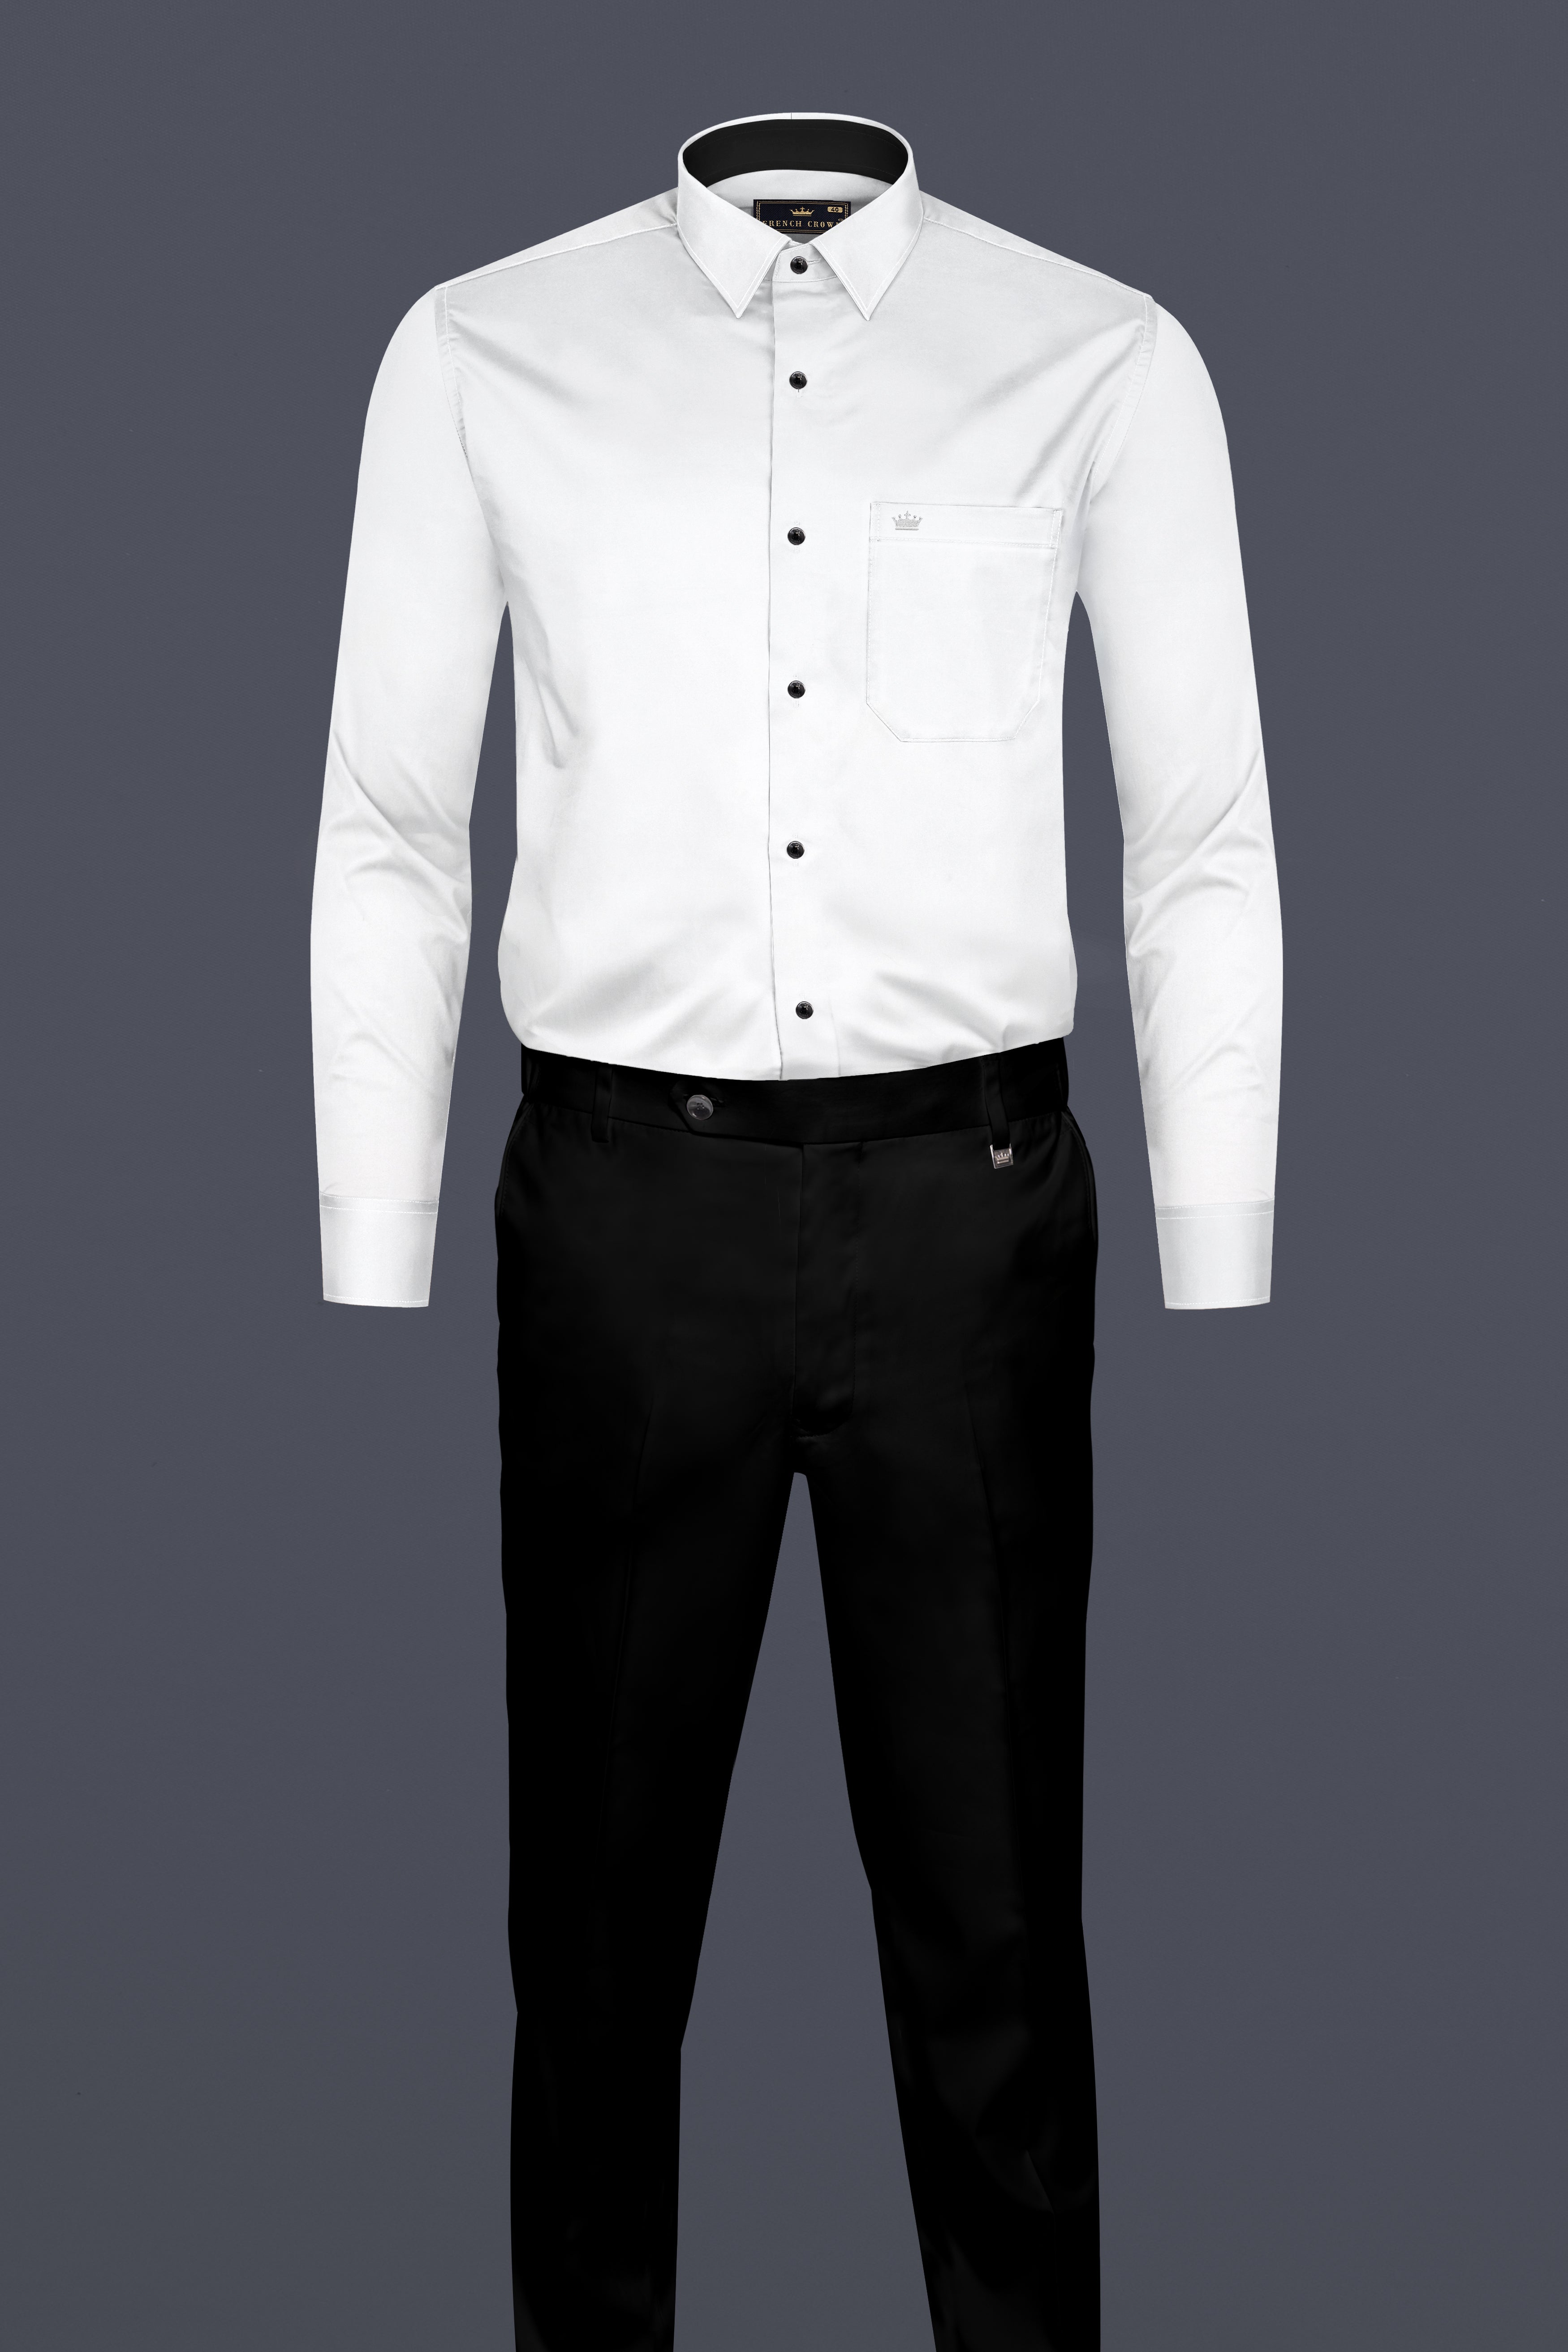 Bright White Subtle Sheen with Black Collar detailed Super Soft Giza Cotton SHIRT